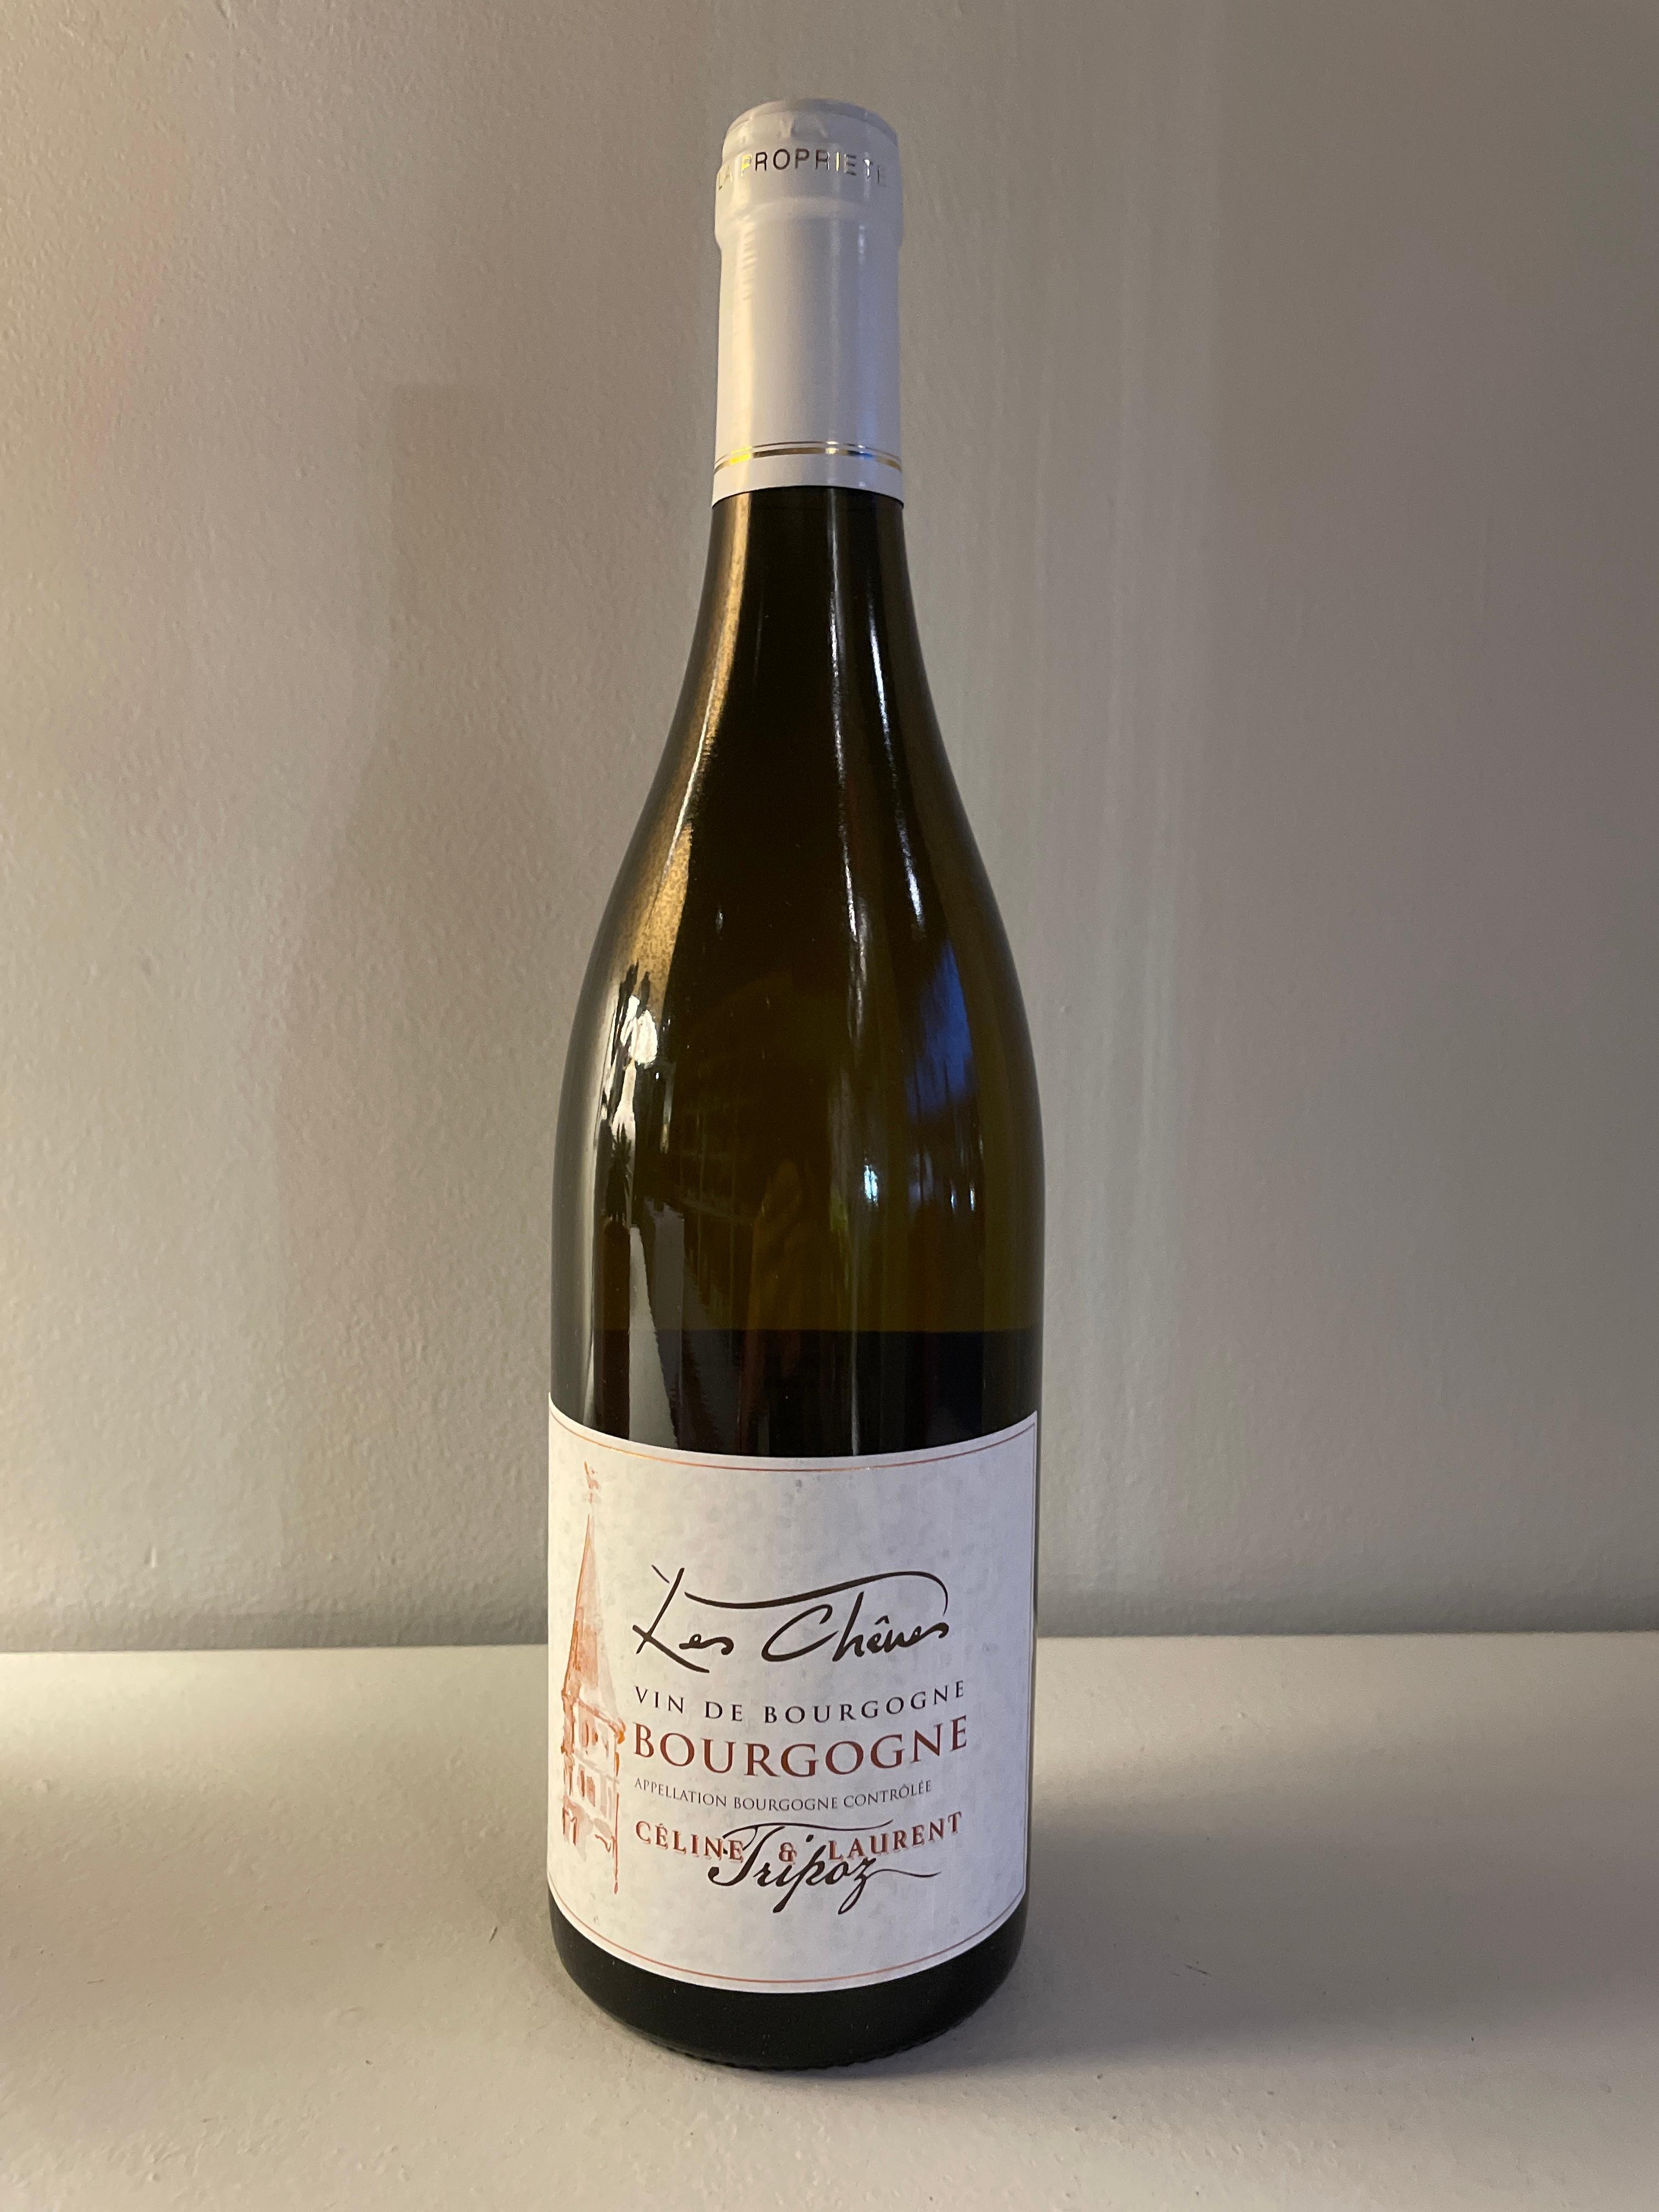 2015 Chardonnay "Les Chenes", Tripoz, Burgundy